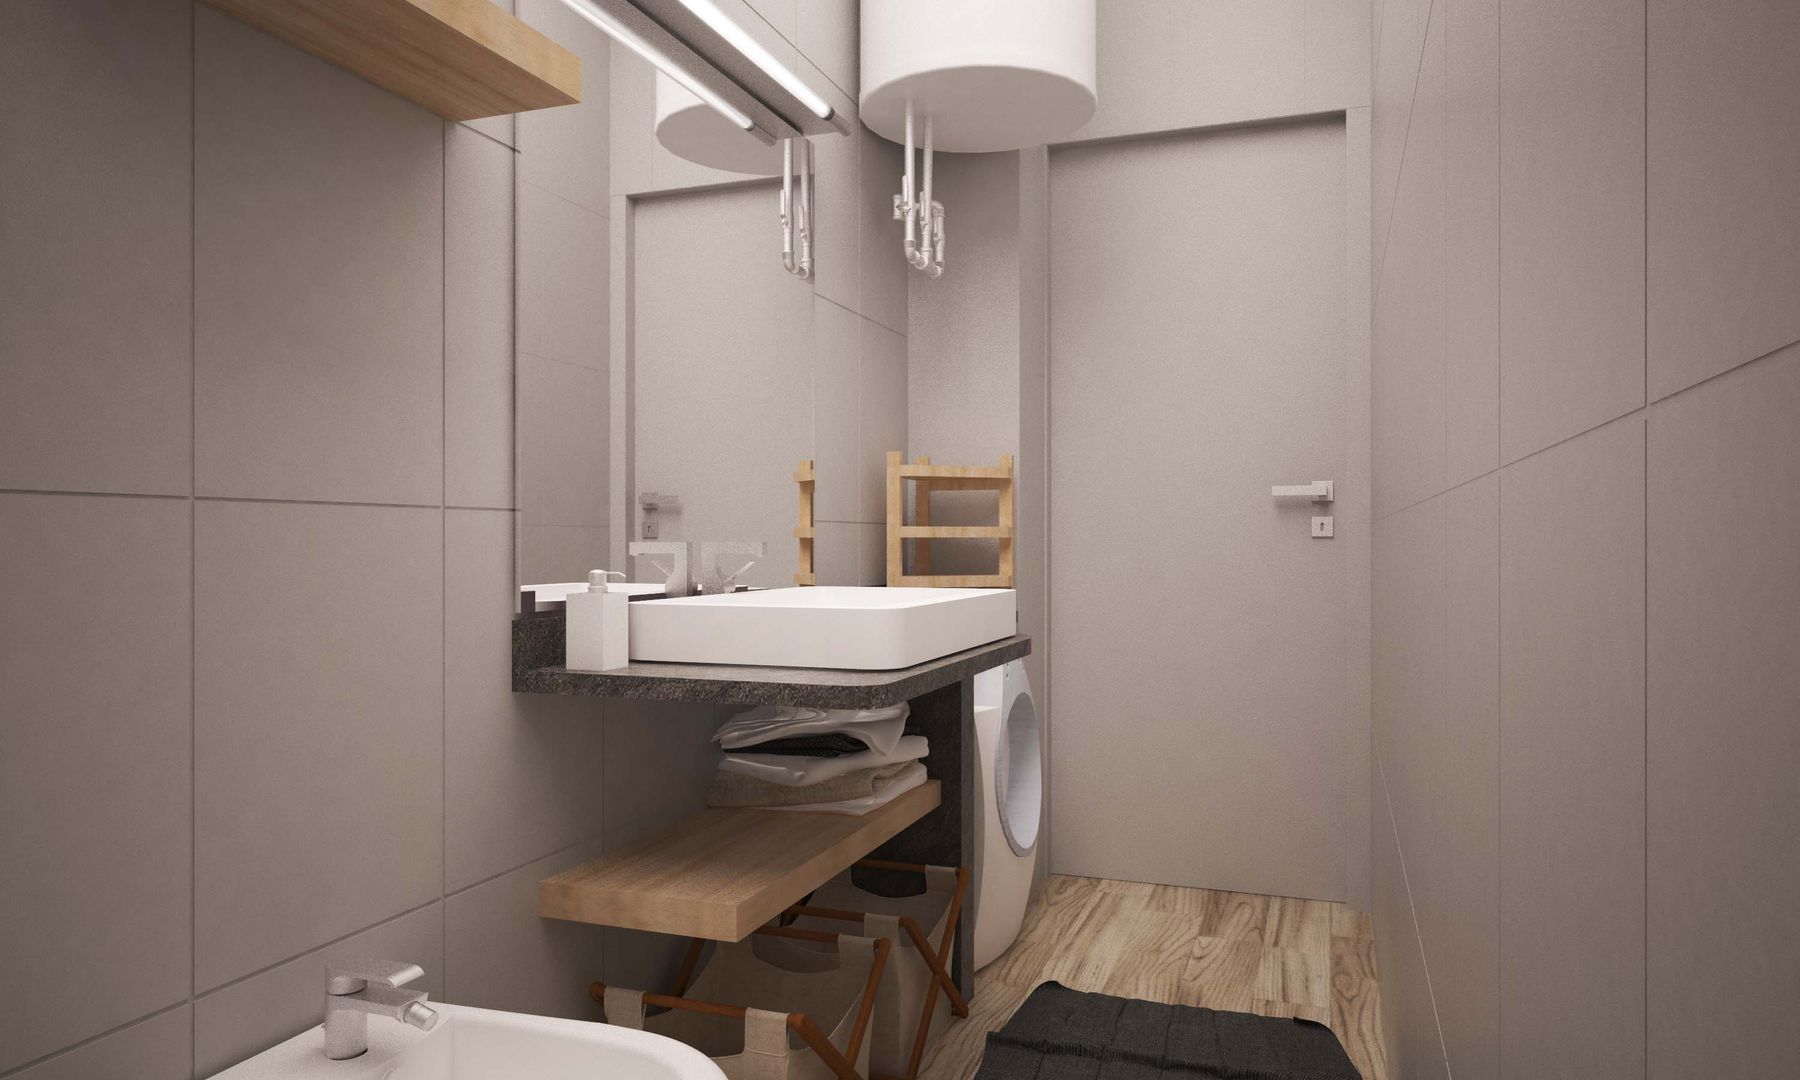 CORSO TORTONA, LAB16 architettura&design LAB16 architettura&design Industrial style bathroom